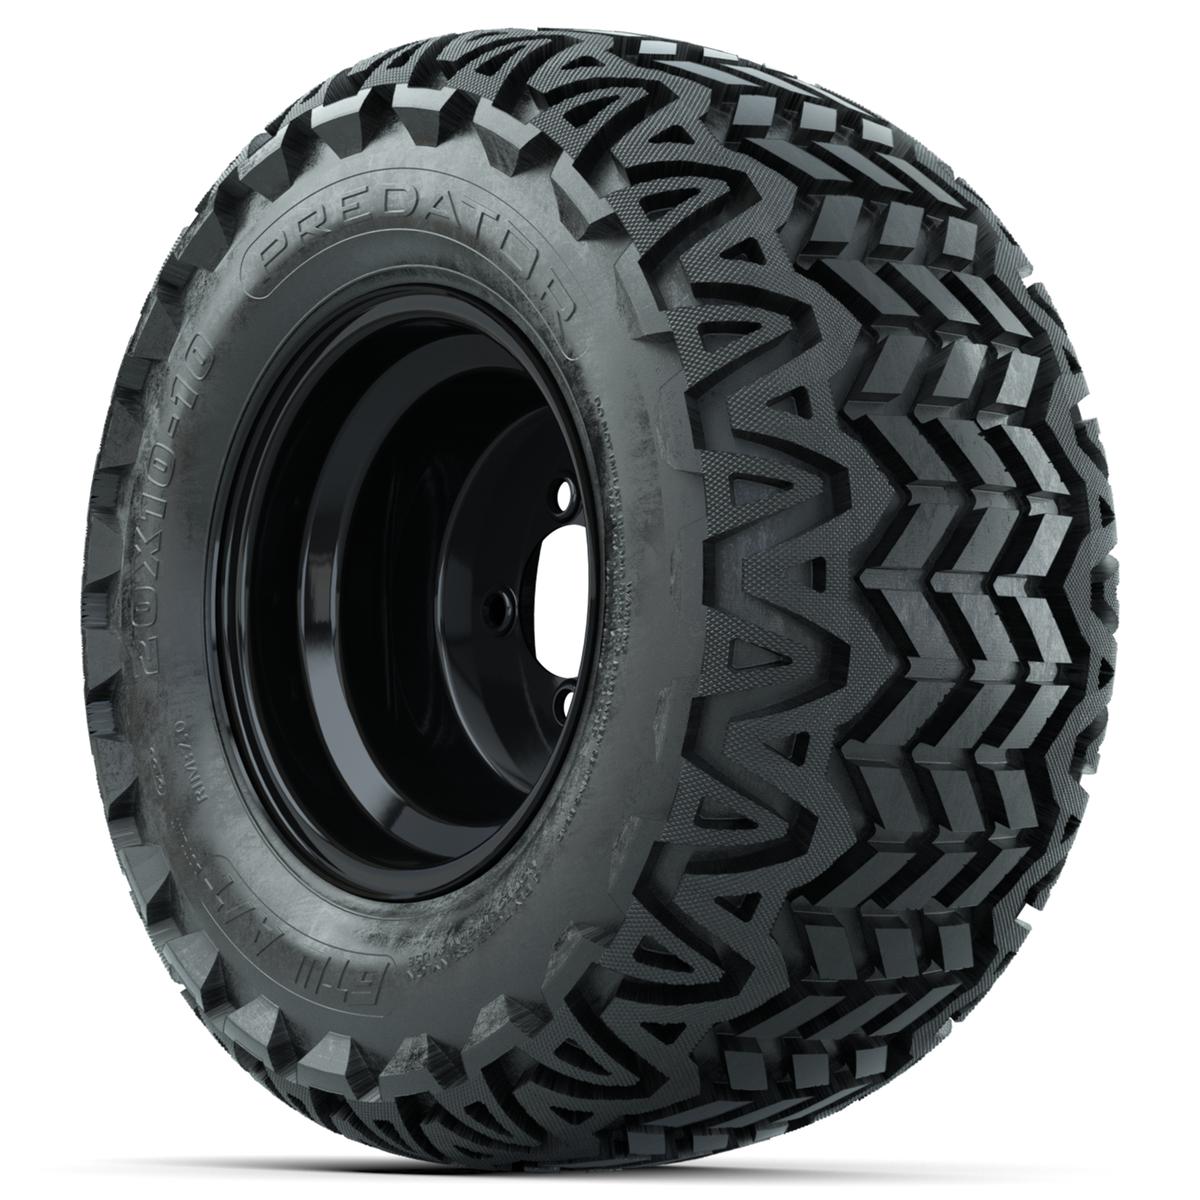 Set of (4) 10 in Black Steel Offset Wheels with 20x10-10 Predator All Terrain Tires